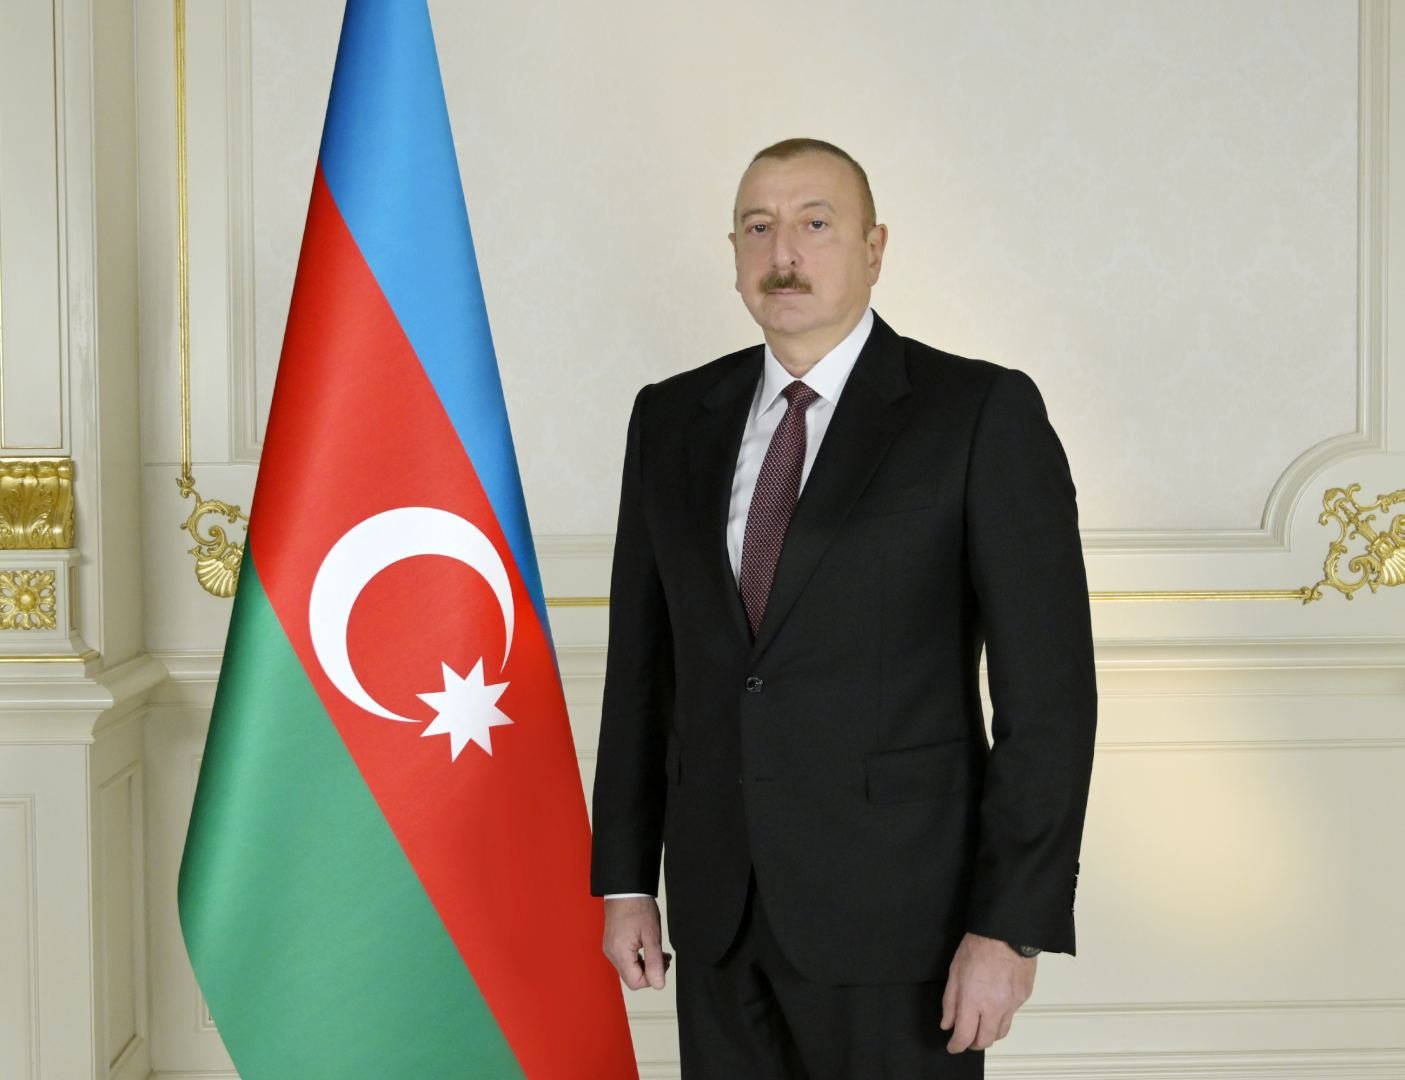 Президент Ильхам Алиев выразил поддержку Президенту Узбекистана в связи с событиями, произошедшими в Каракалпакстане